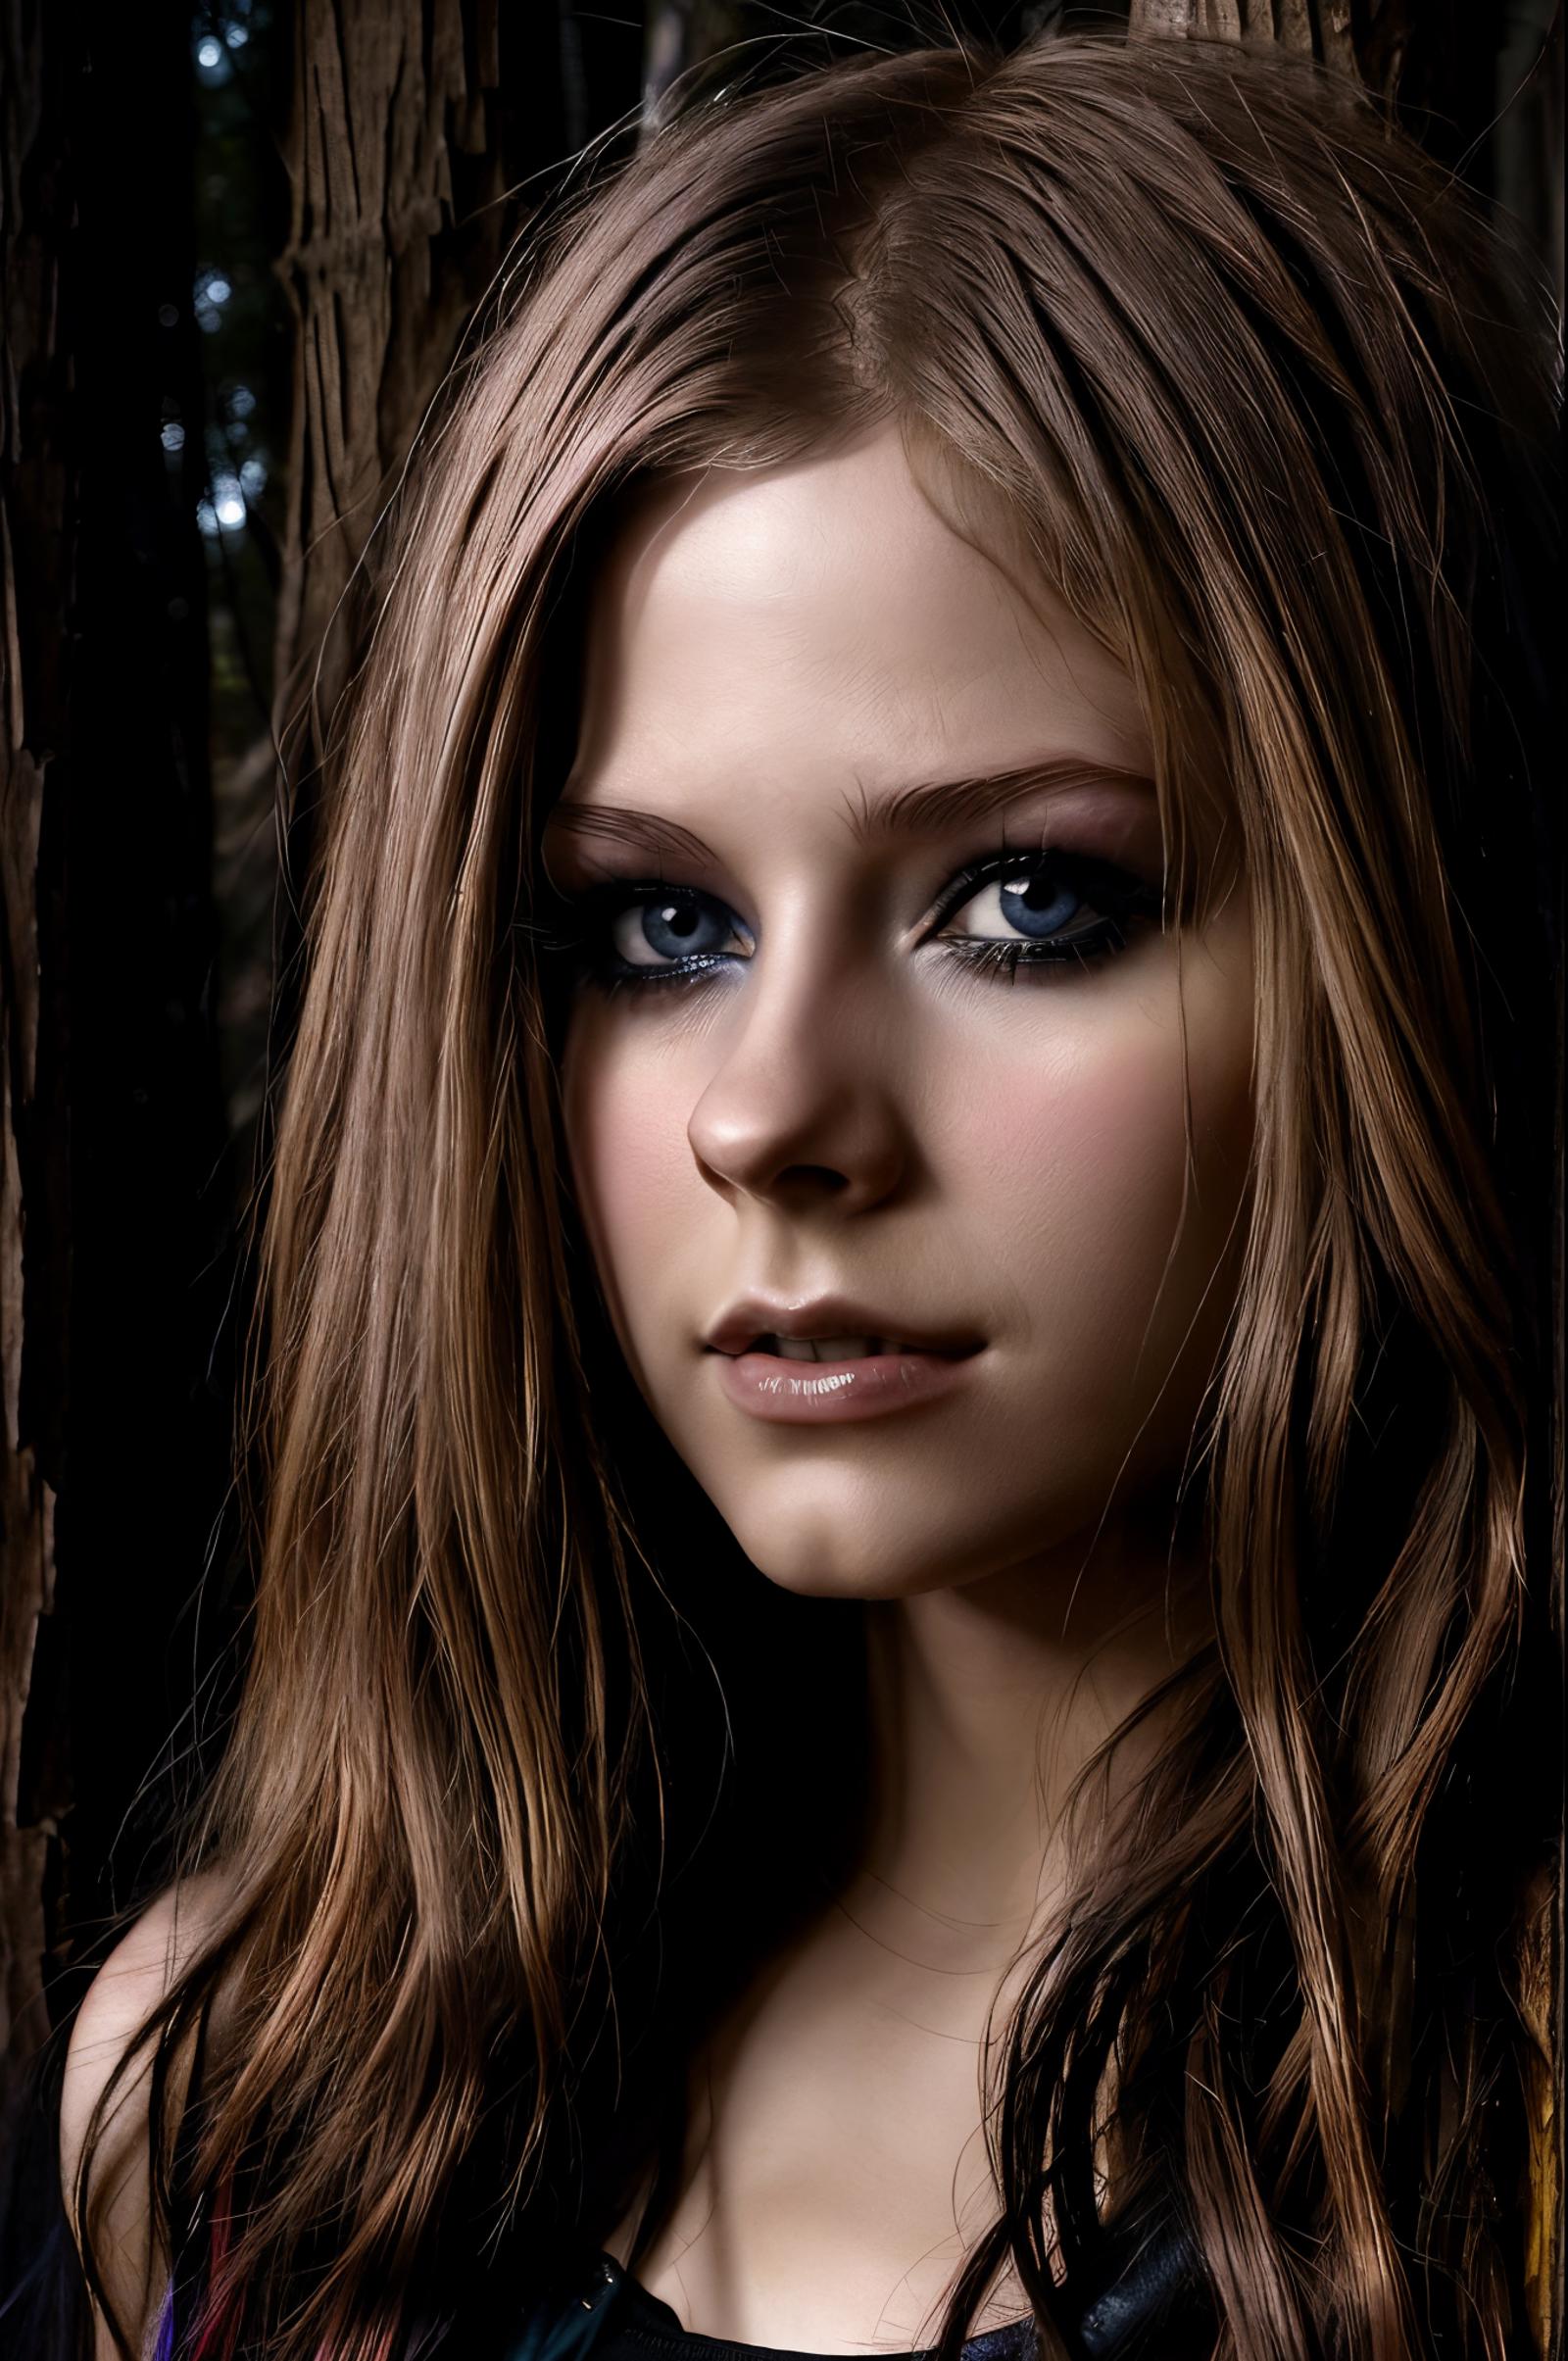 Avril Lavigne LoRA image by Roger2094